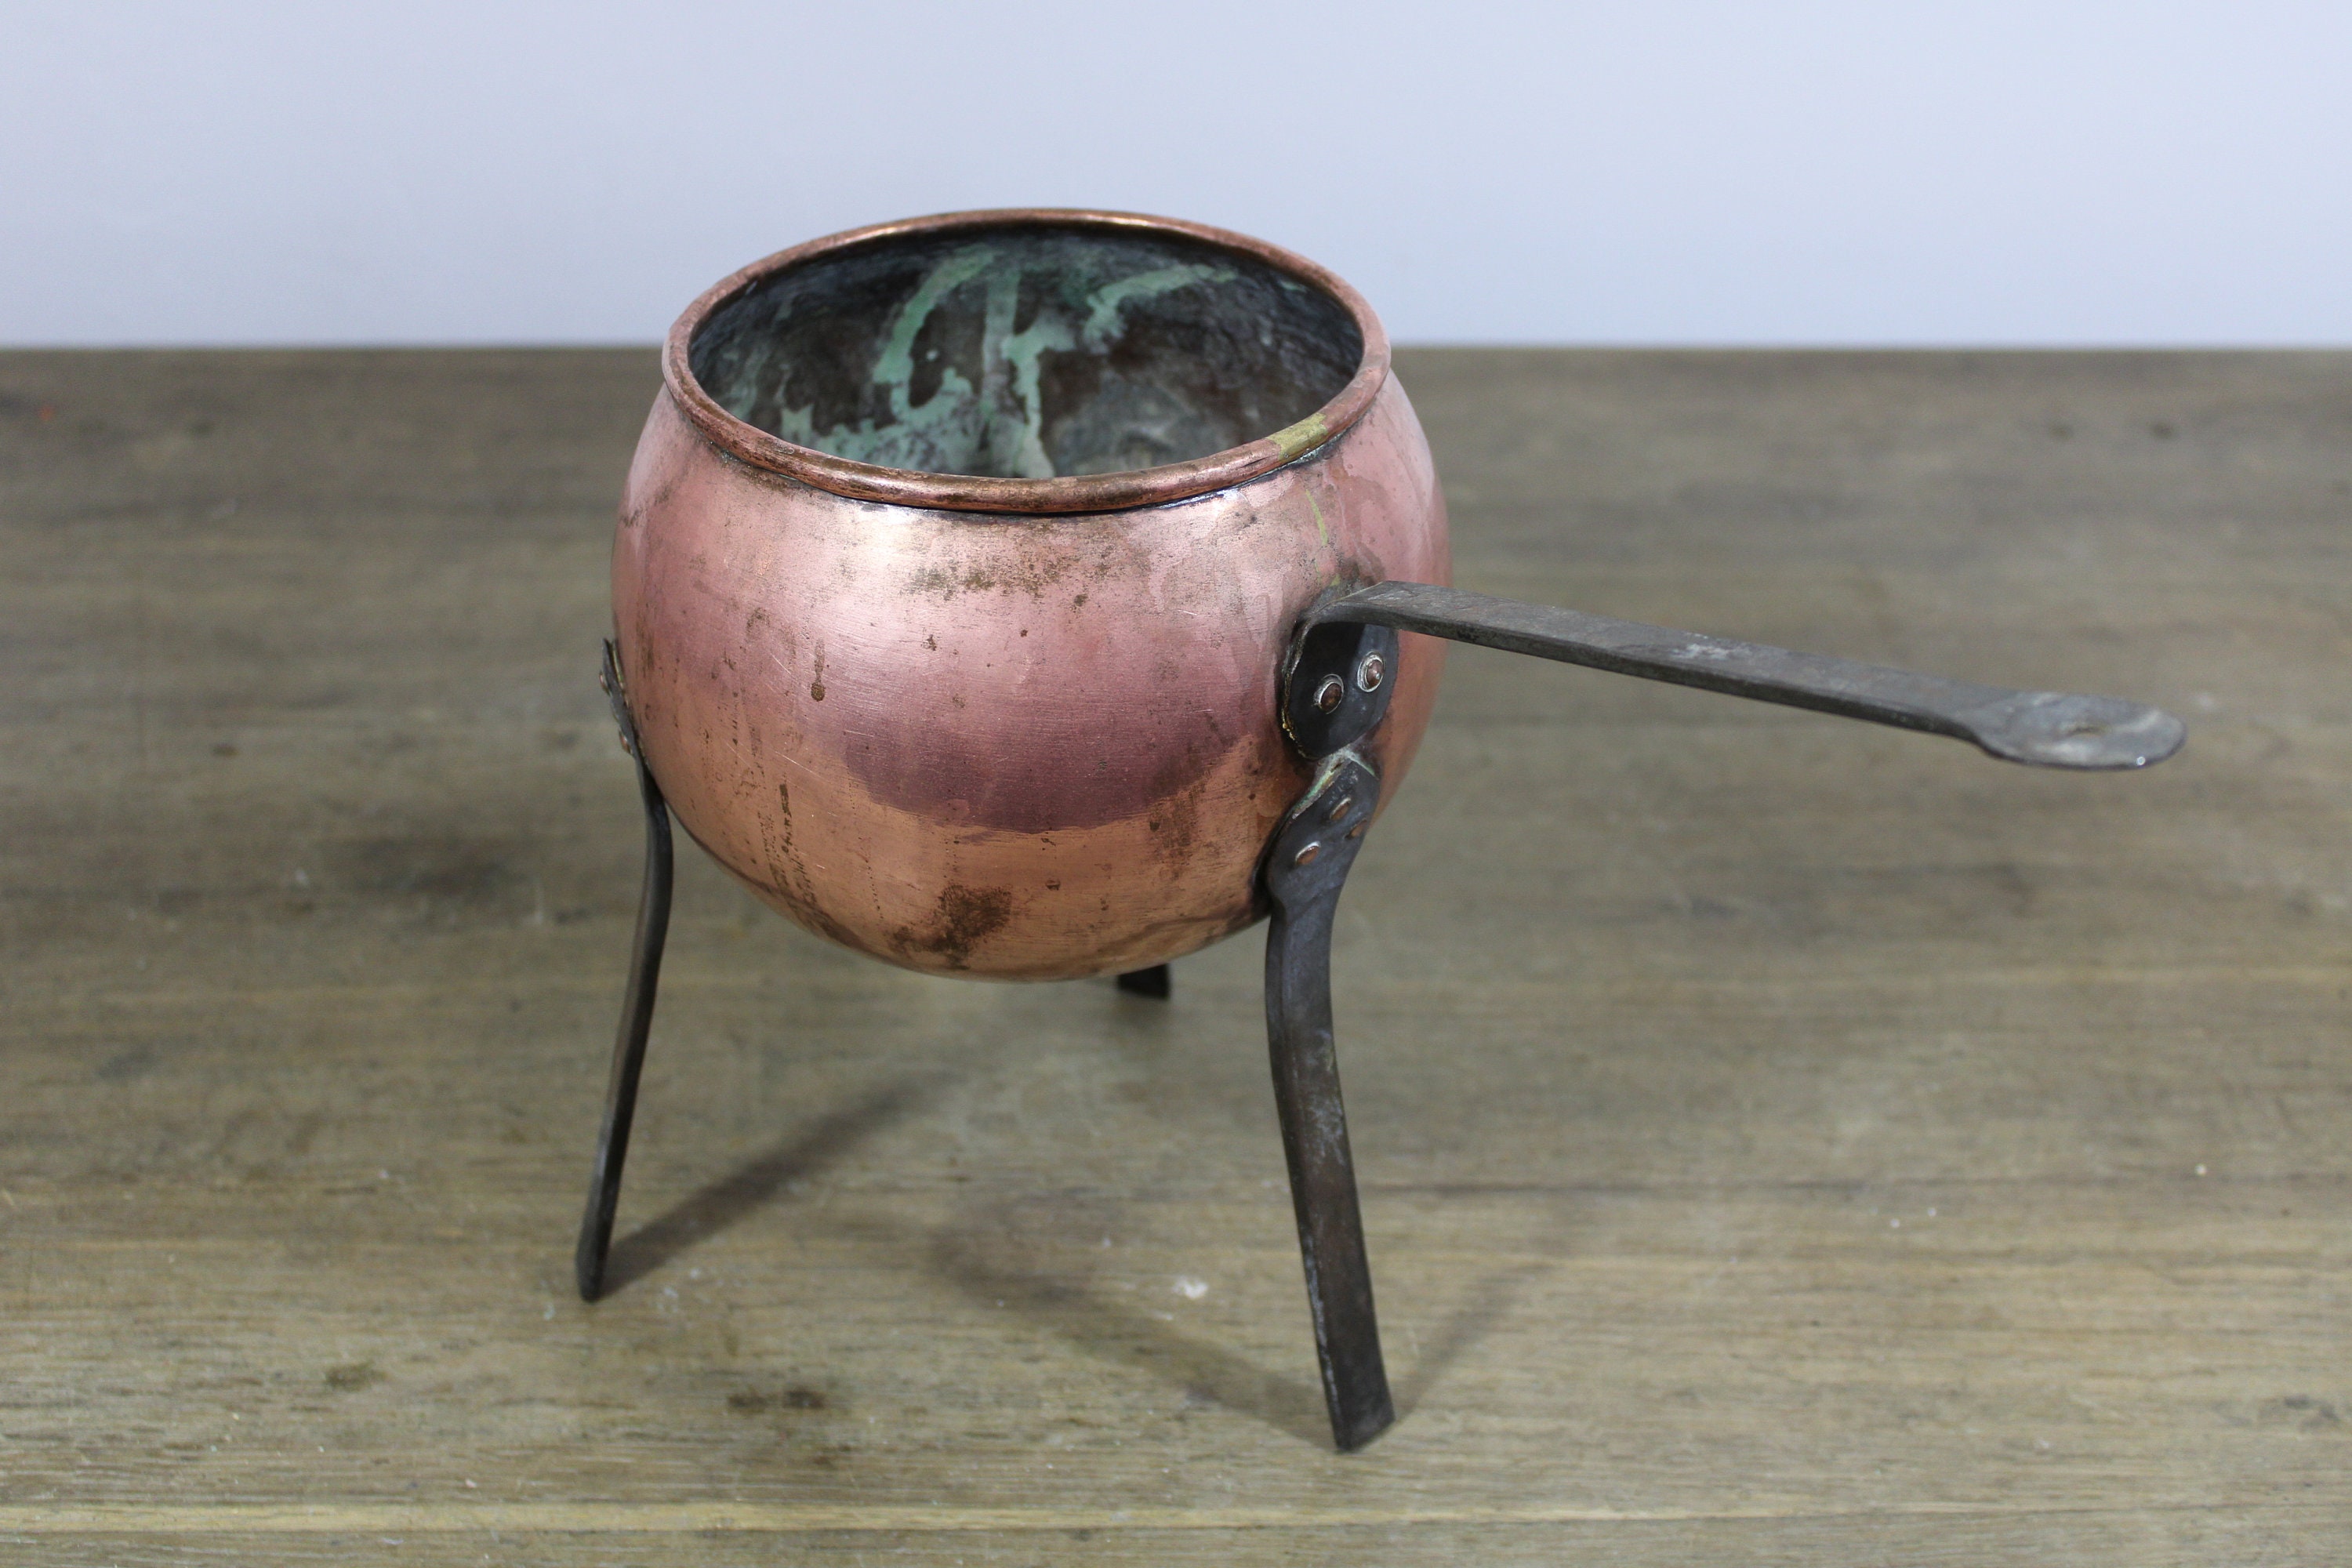 Antique cast iron glue pot hi-res stock photography and images - Alamy